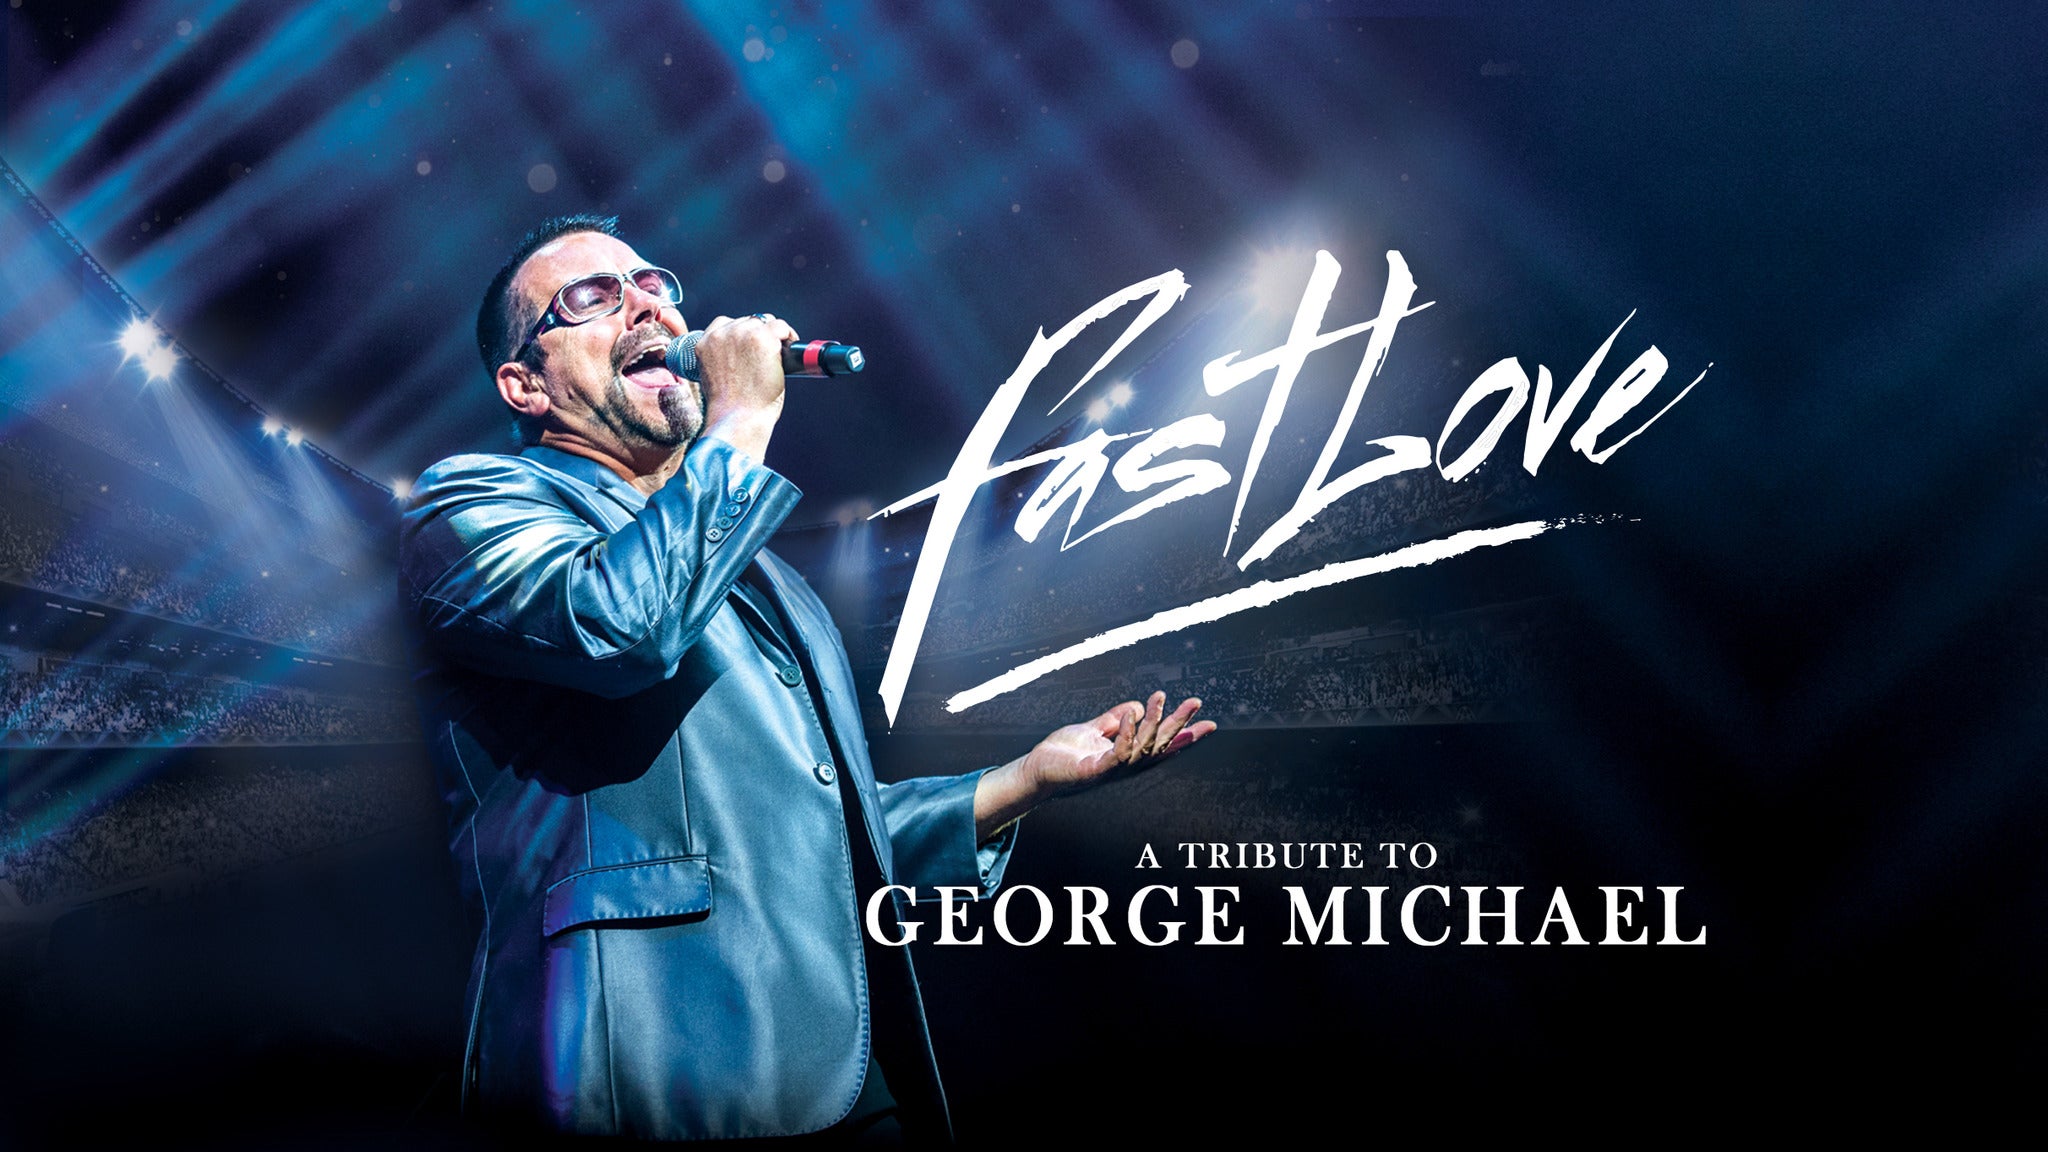 Fast Love - a Tribute To George Michael presale information on freepresalepasswords.com